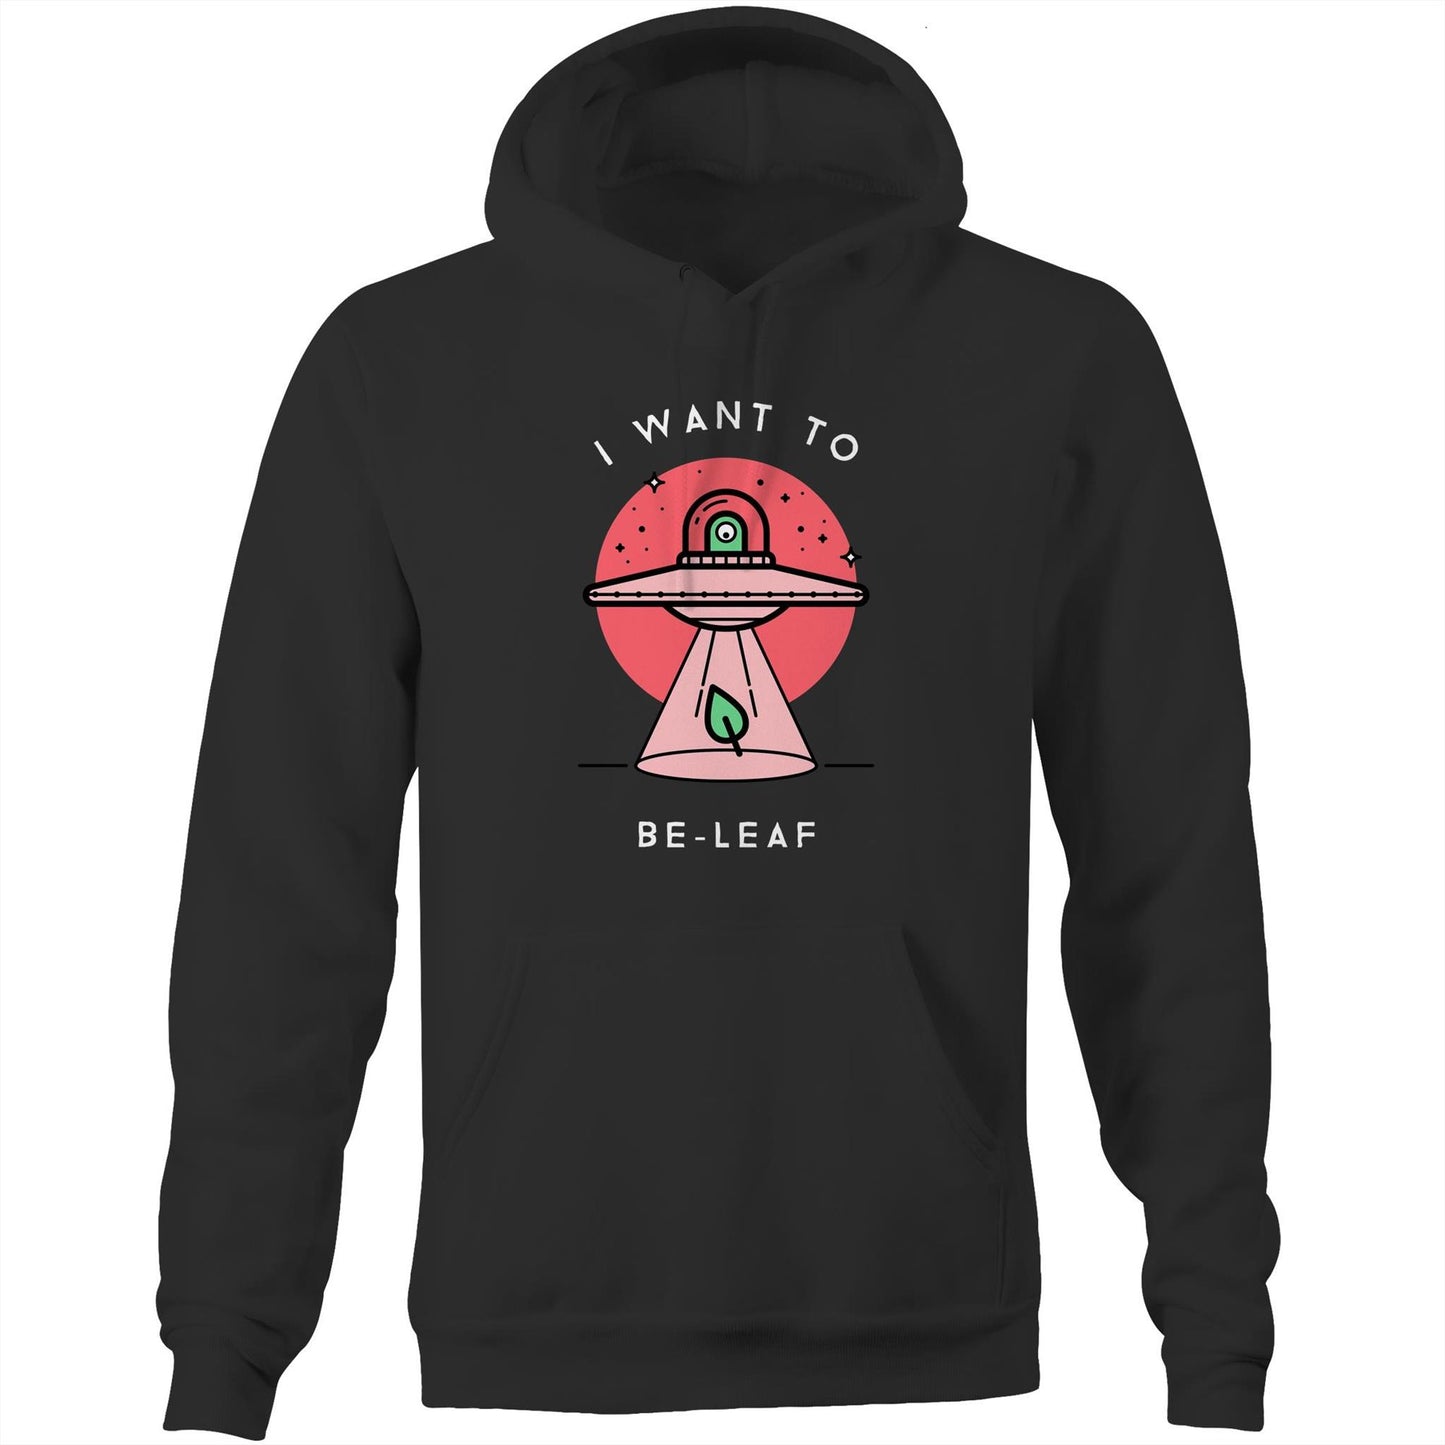 I Want To Be-Leaf, UFO - Pocket Hoodie Sweatshirt Black Hoodie Sci Fi